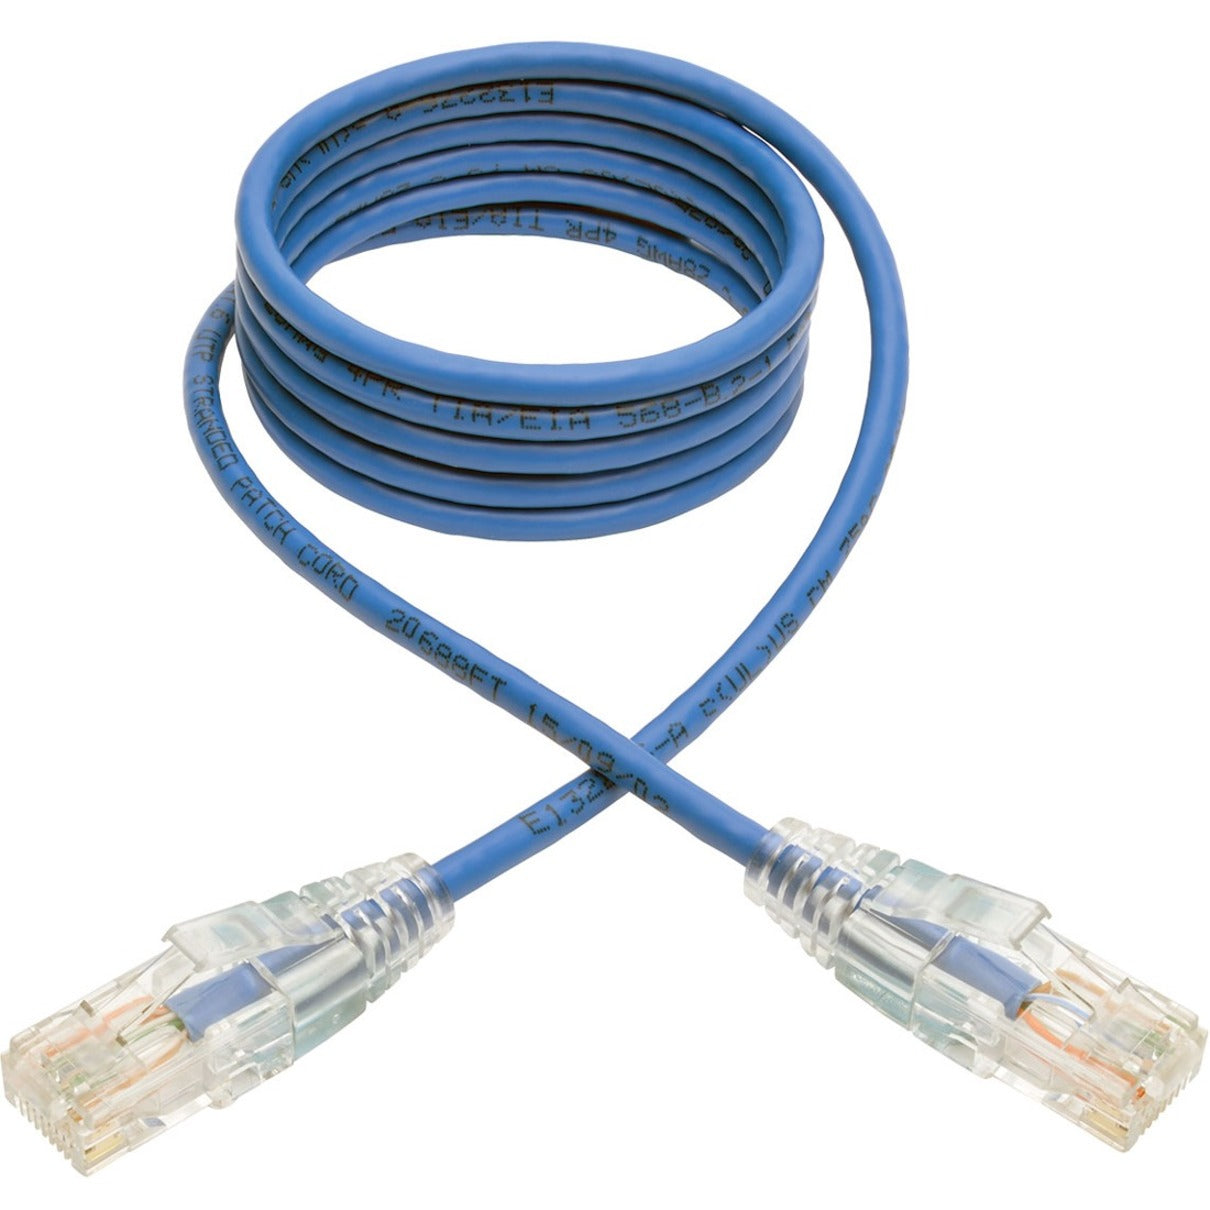 Tripp Lite N201-S04-BL Cat6 Gigabit Snagless Molded Slim UTP Patch Cable (RJ45 M/M) Blue 4ft  トリップライト N201-S04-BL Cat6 Gigabit スナッグレス成形スリム UTP パッチケーブル (RJ45 M/M) ブルー 4フィート